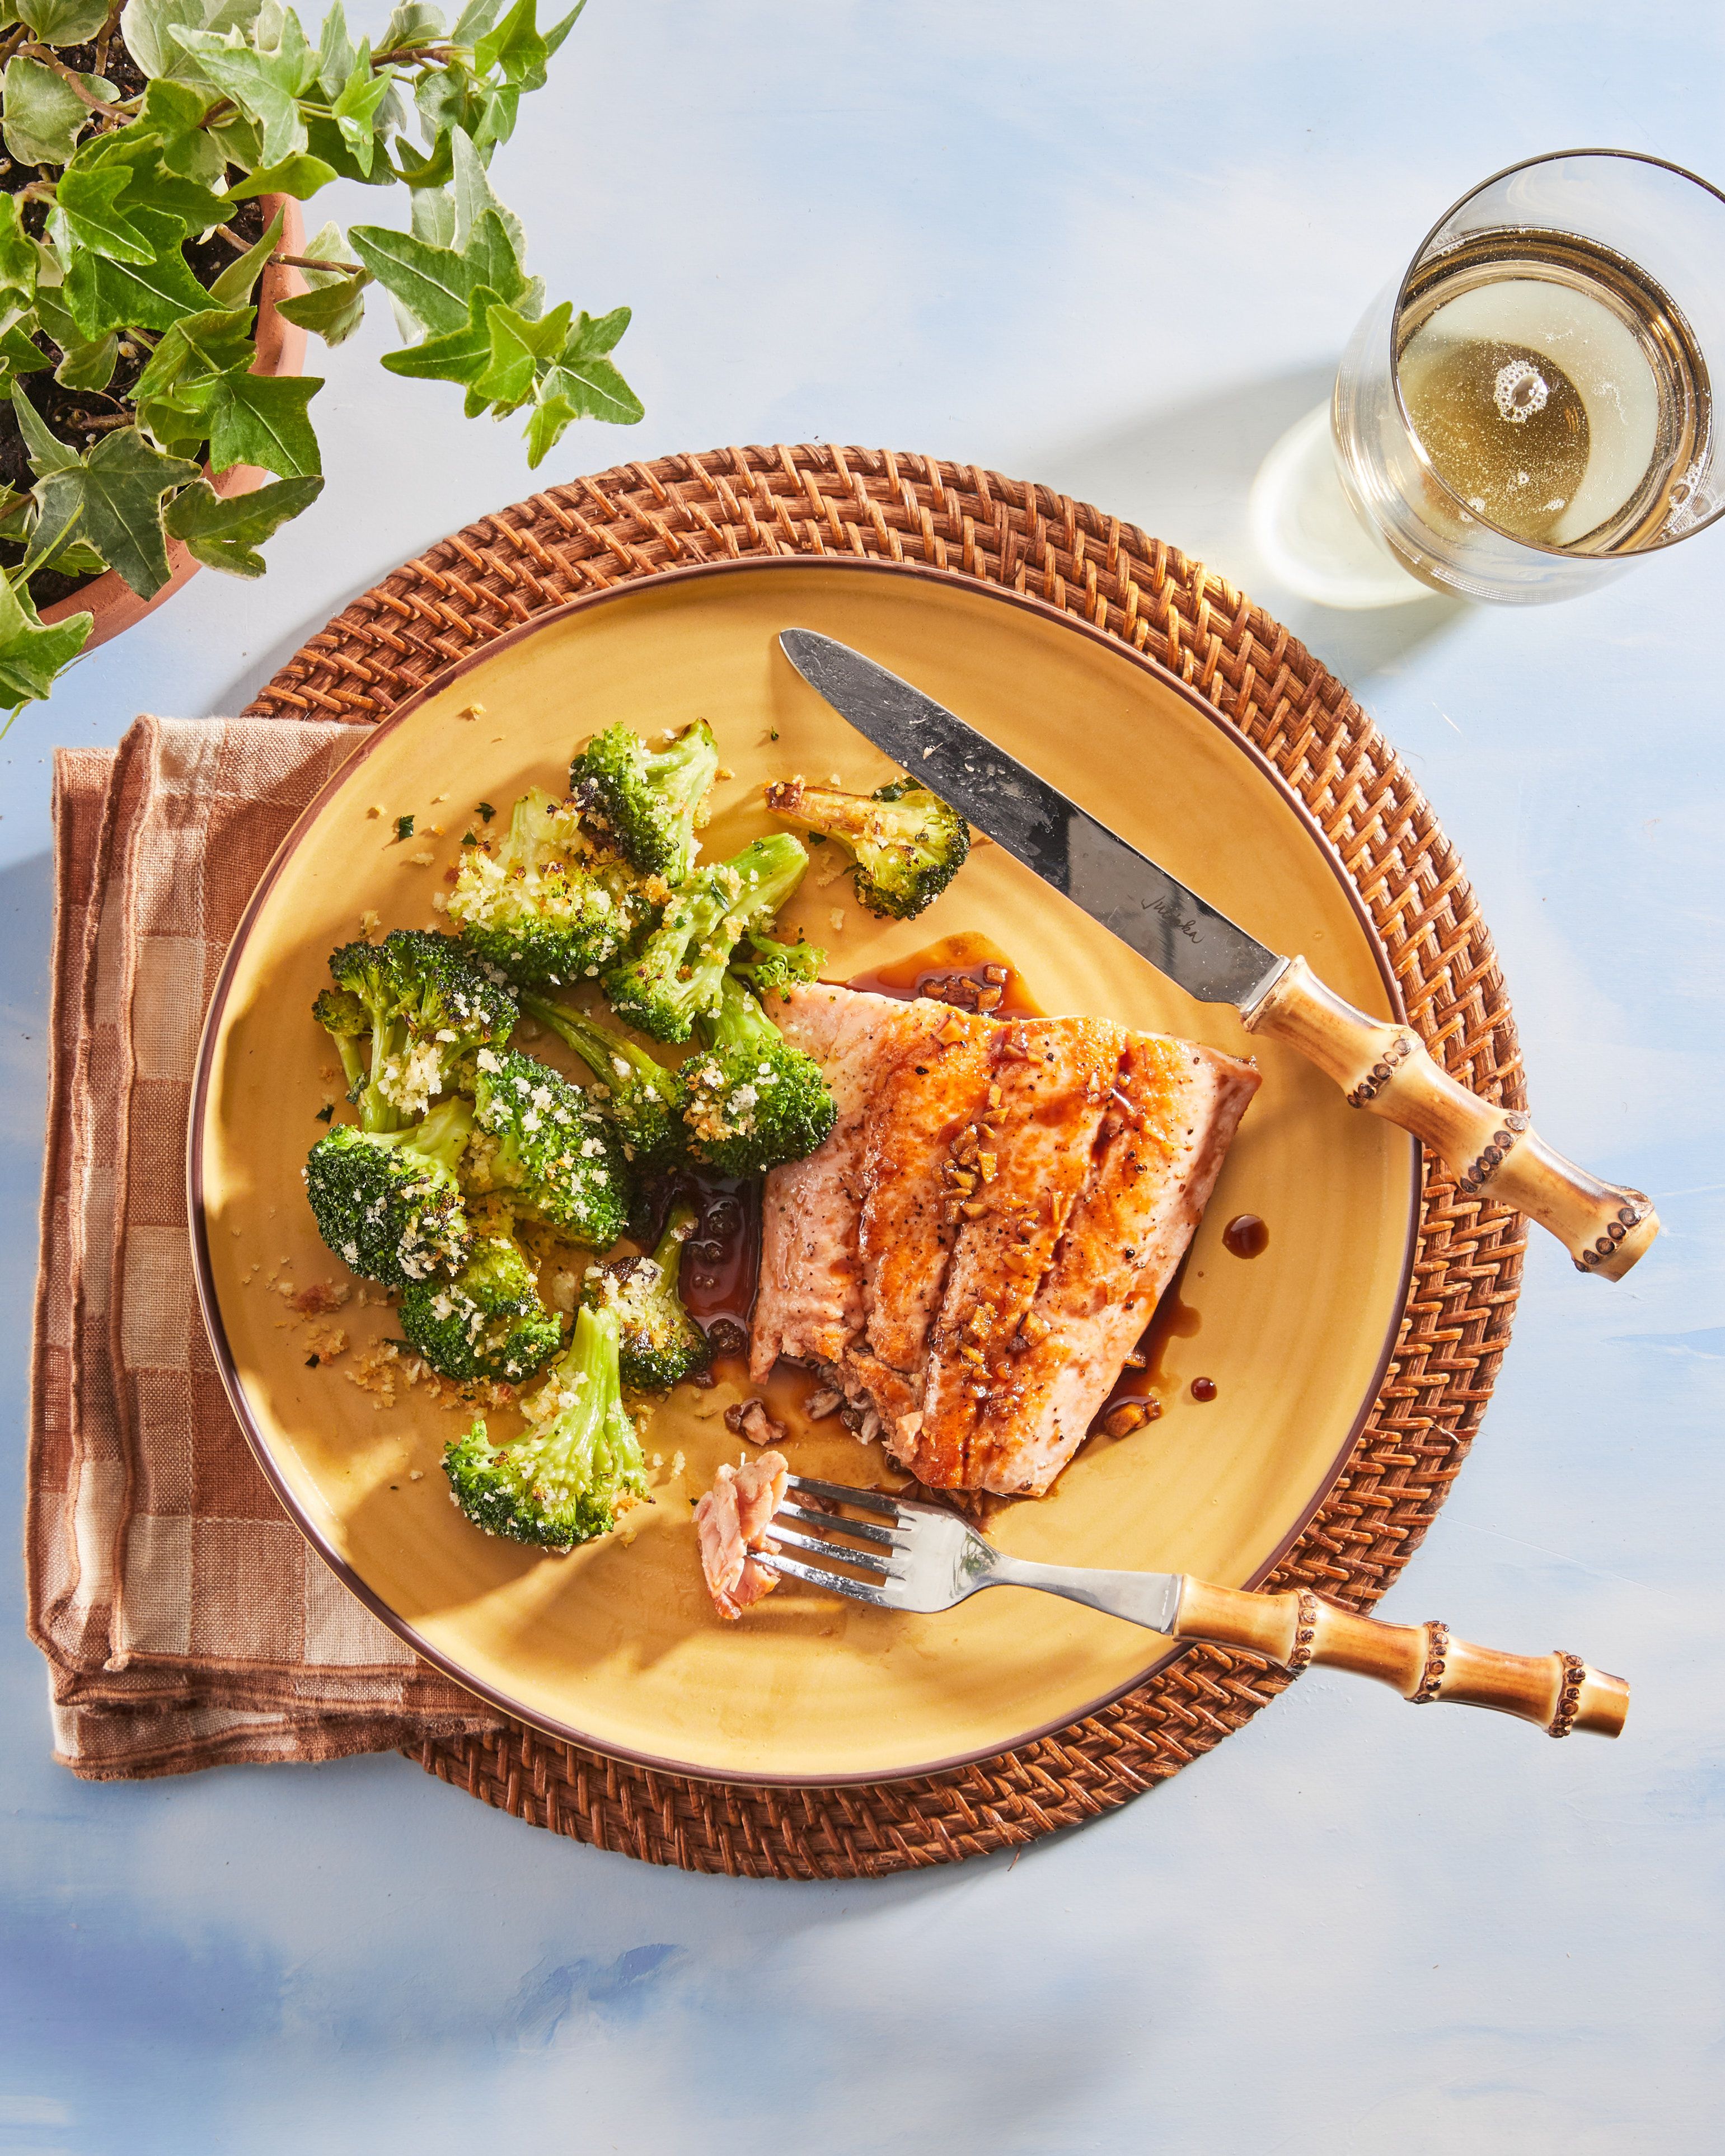 https://hips.hearstapps.com/hmg-prod/images/cast-iron-skillet-recipes-teriyaki-salmon-with-crispy-roasted-broccoli-1652737654.jpg